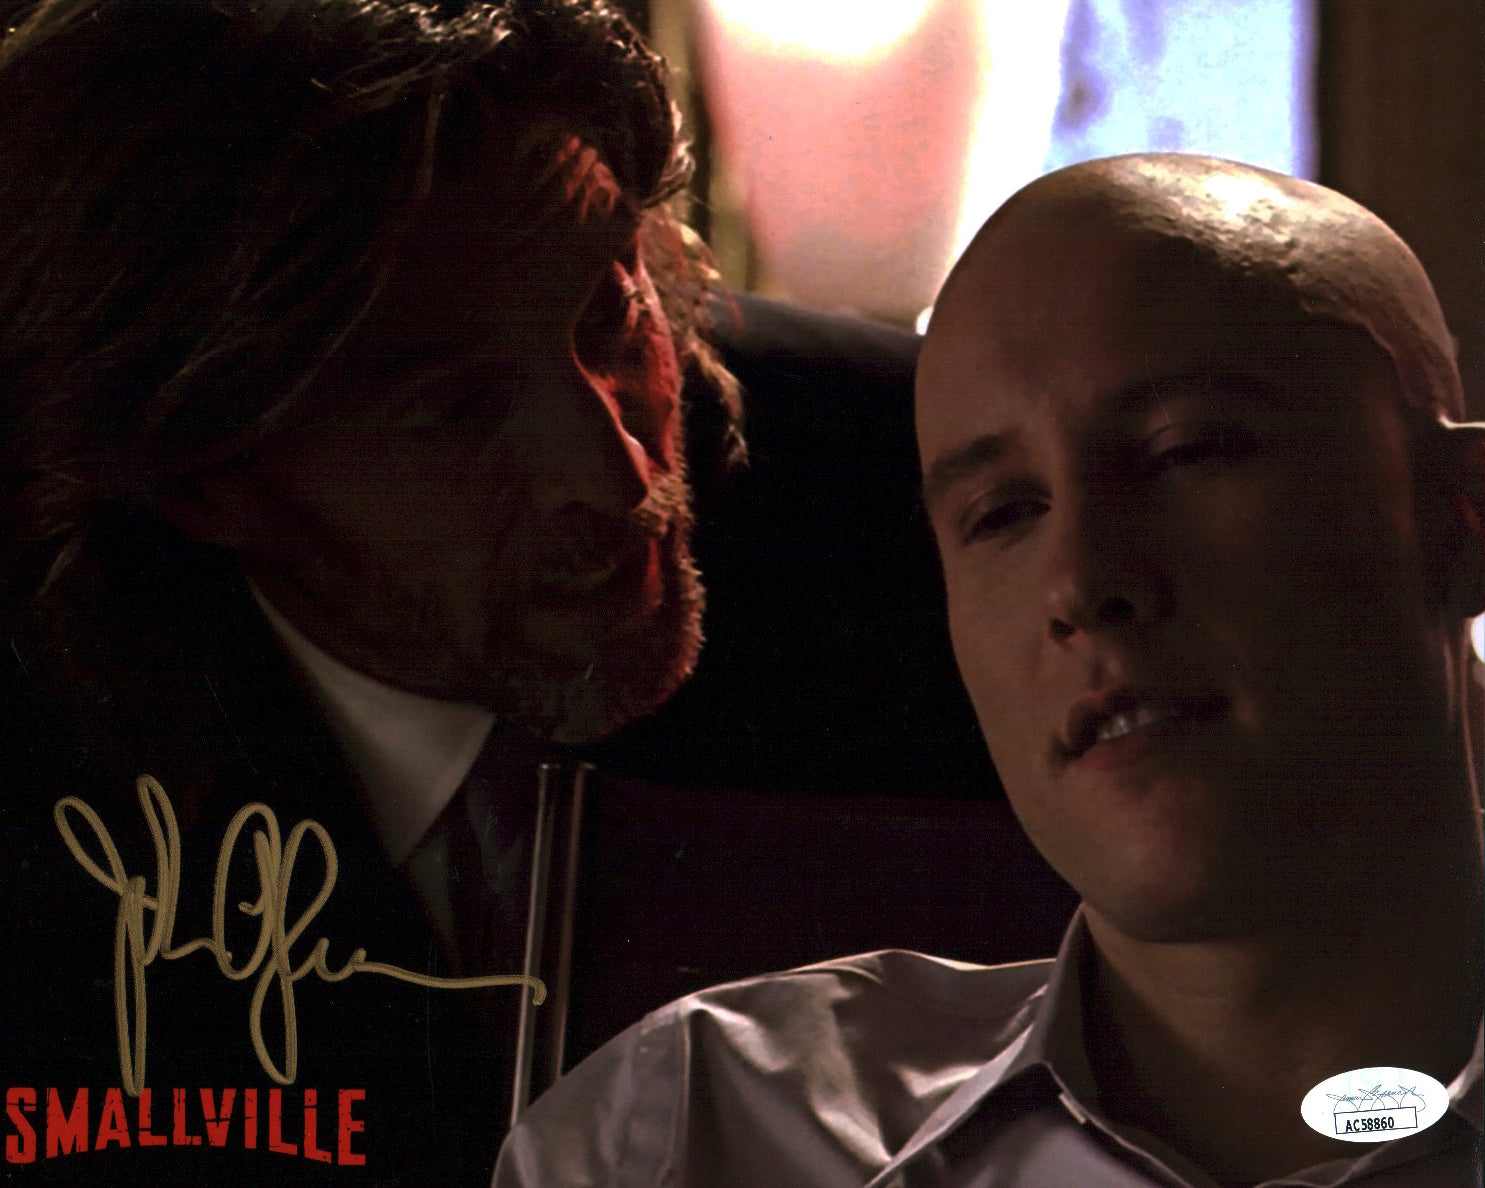 John Glover Smallville 8x10 Photo Signed Autographed JSA Certified COA